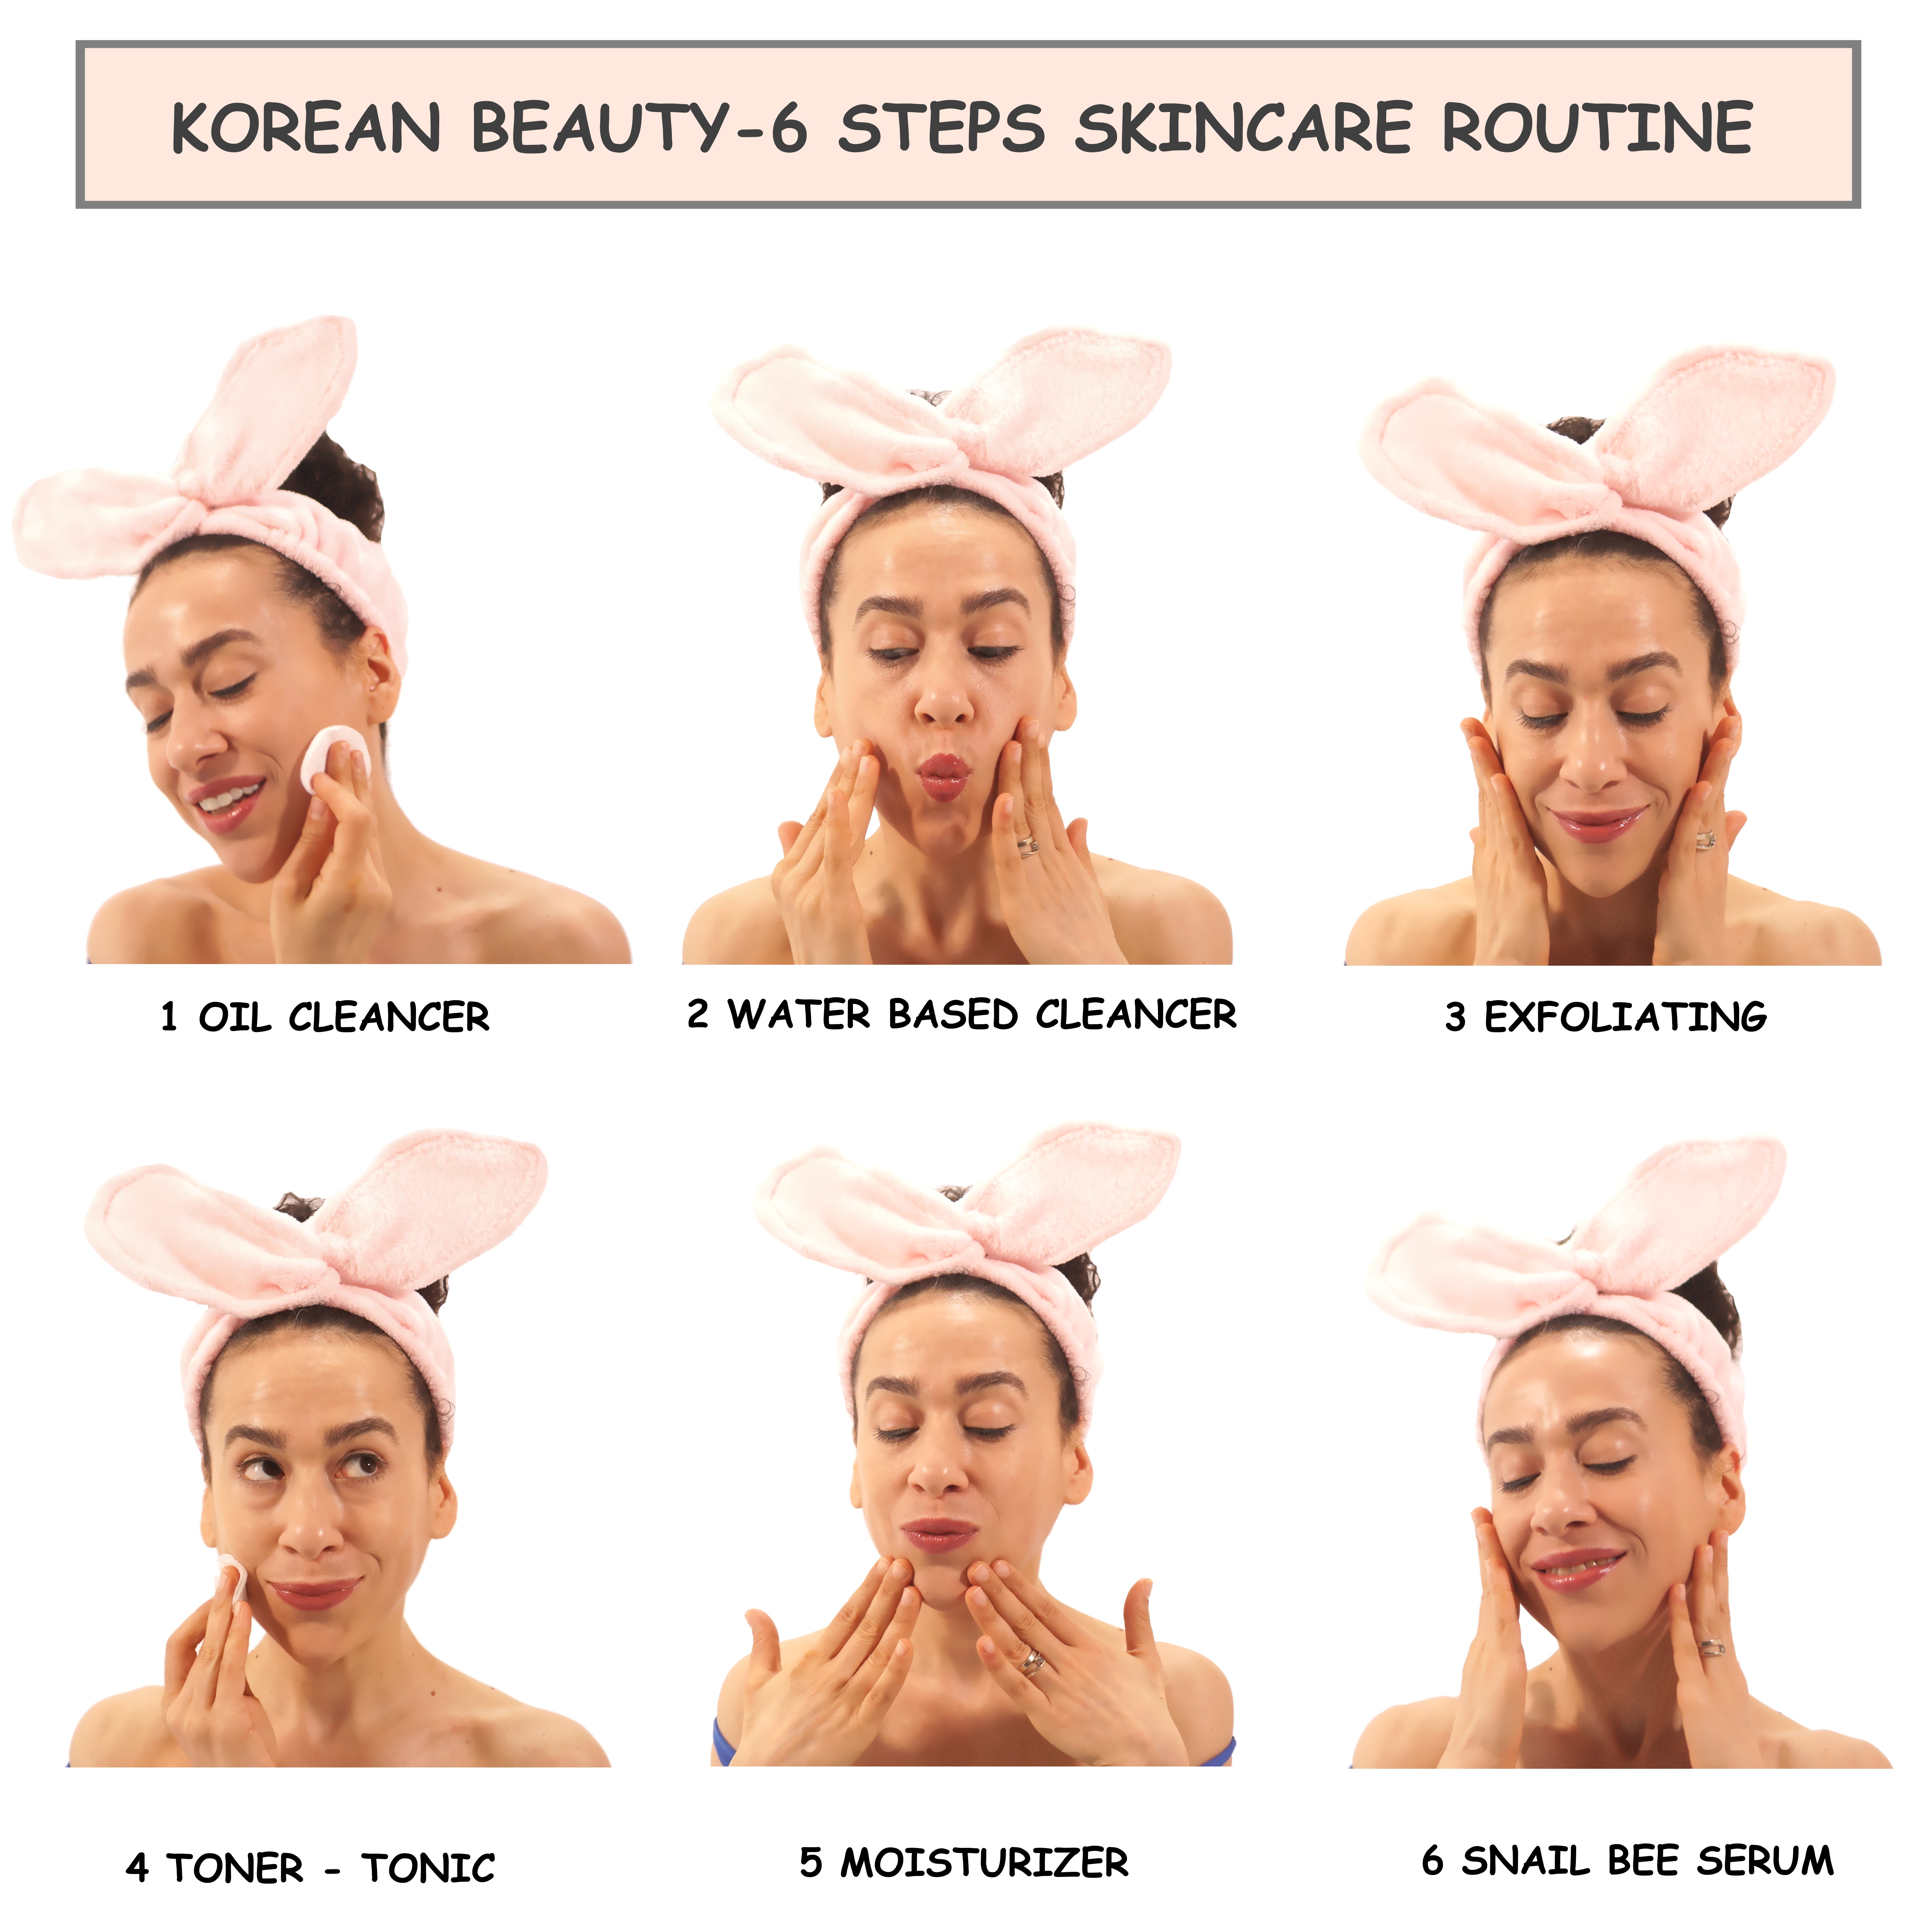 KOREAN BEAUTY - 6 STEPS SKINCARE ROUTINE